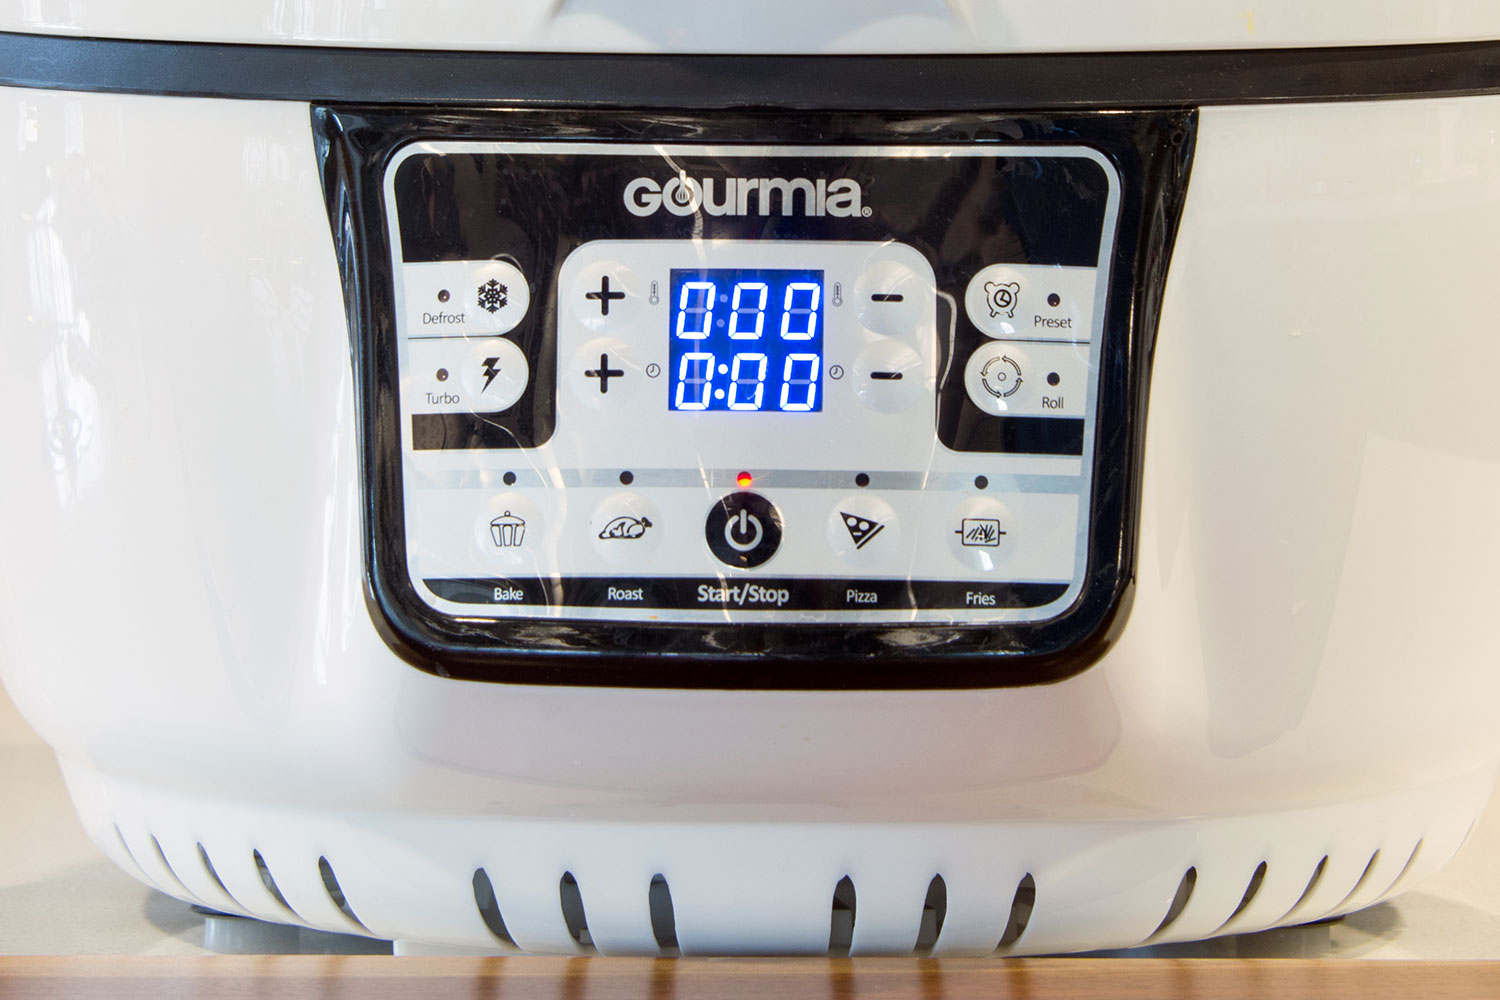 Gourmia Digital Air Fryer White/Black GTA2500 - Best Buy